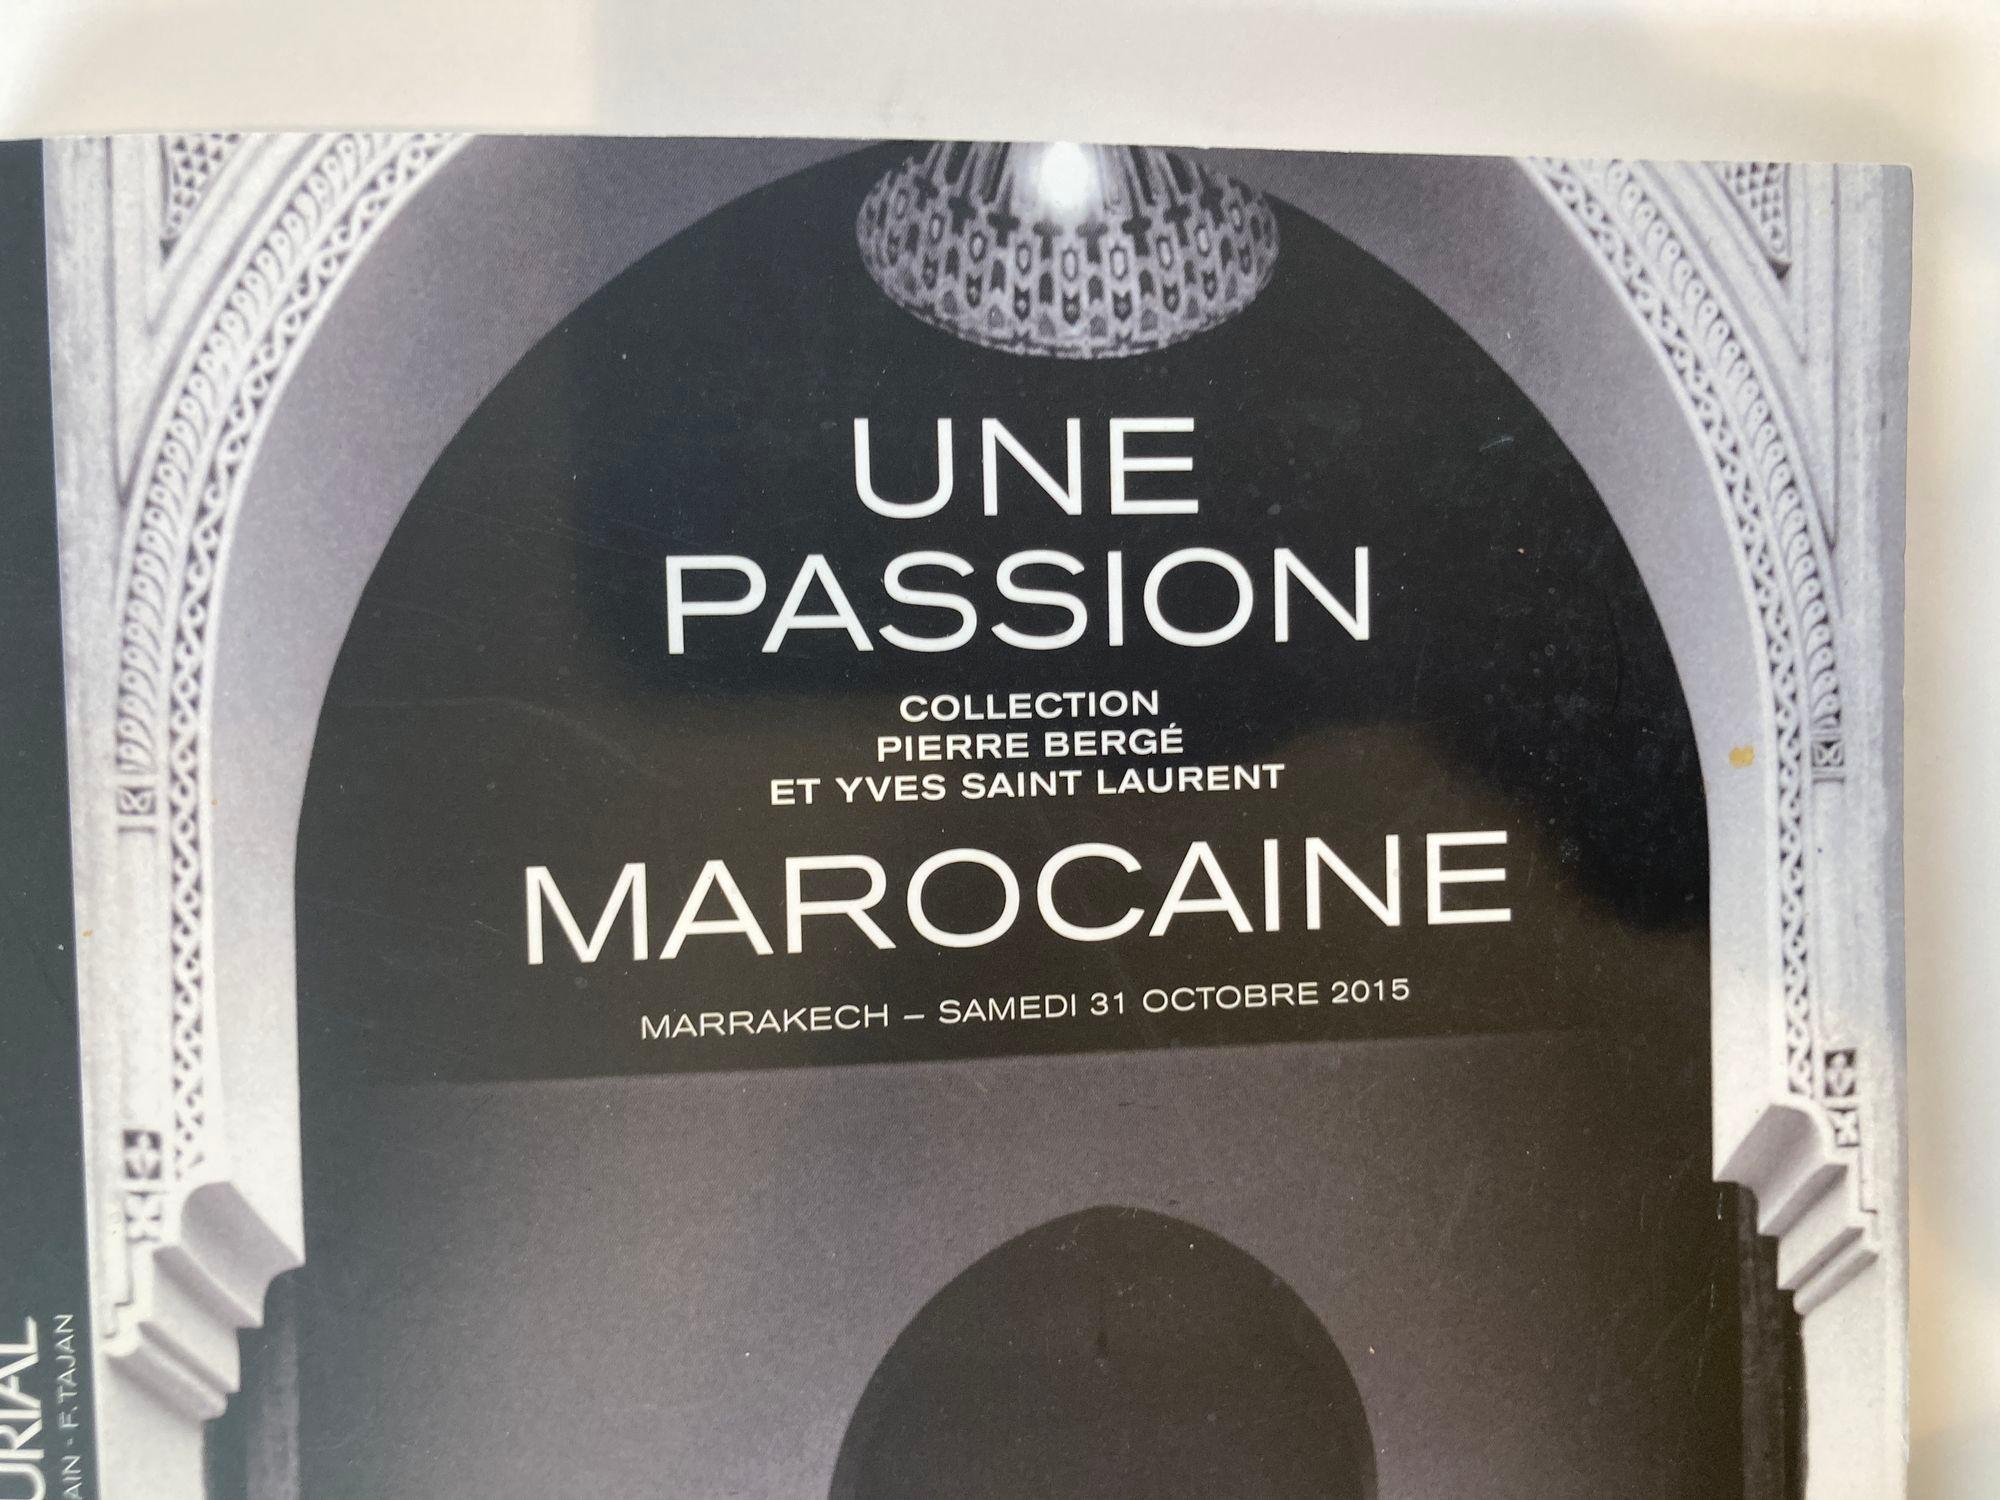 Moorish Pierre Berge & Yves Saint Laurent, Une Passion Marocaine 2015 Auction Book